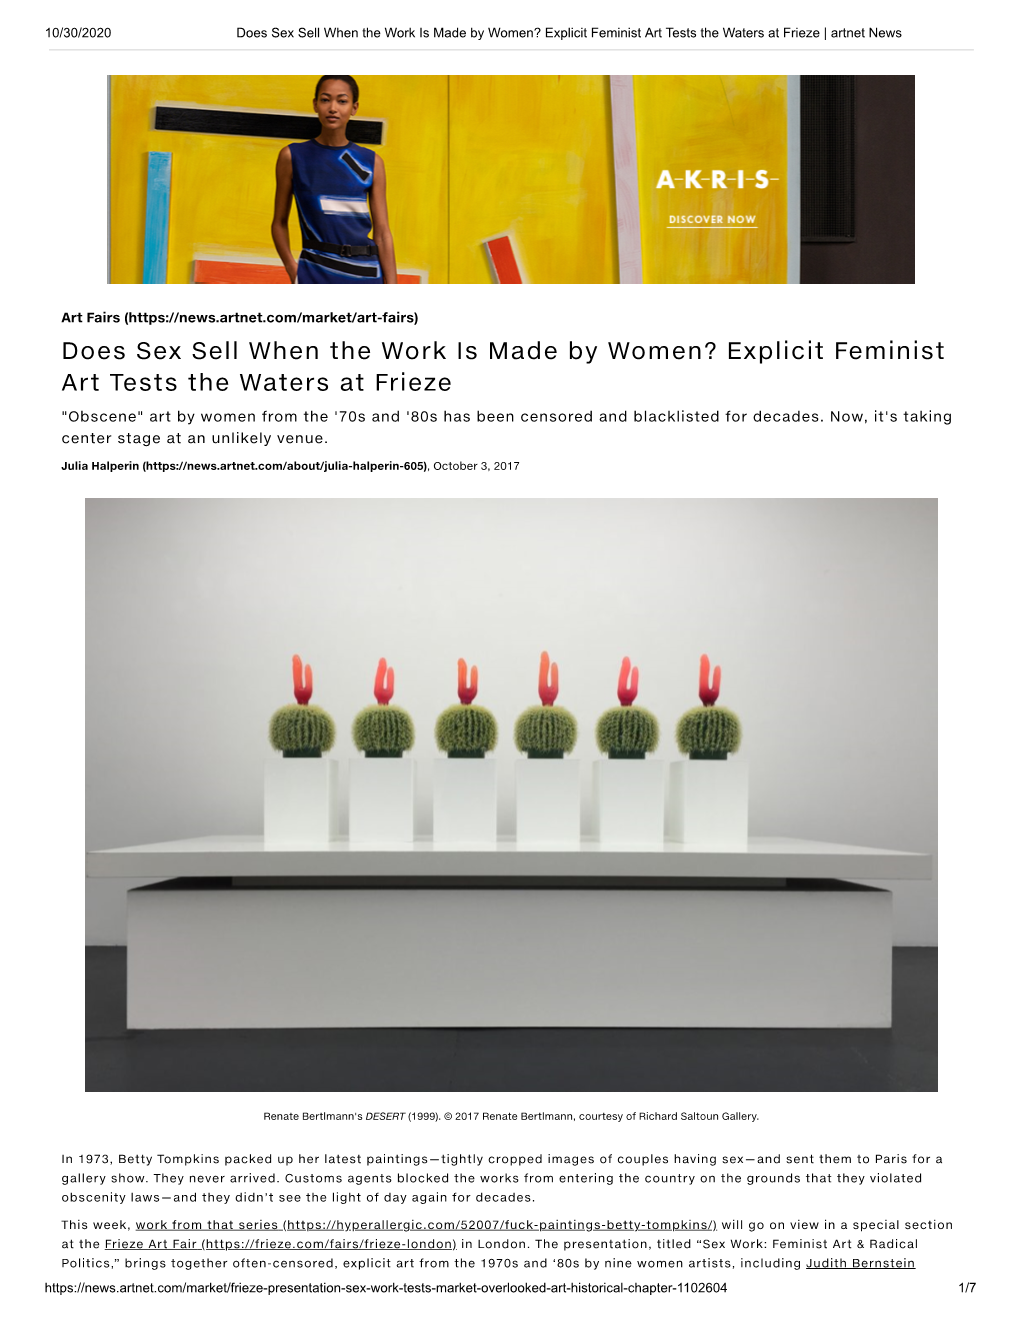 Explicit Feminist Art Tests the Waters at Frieze | Artnet News